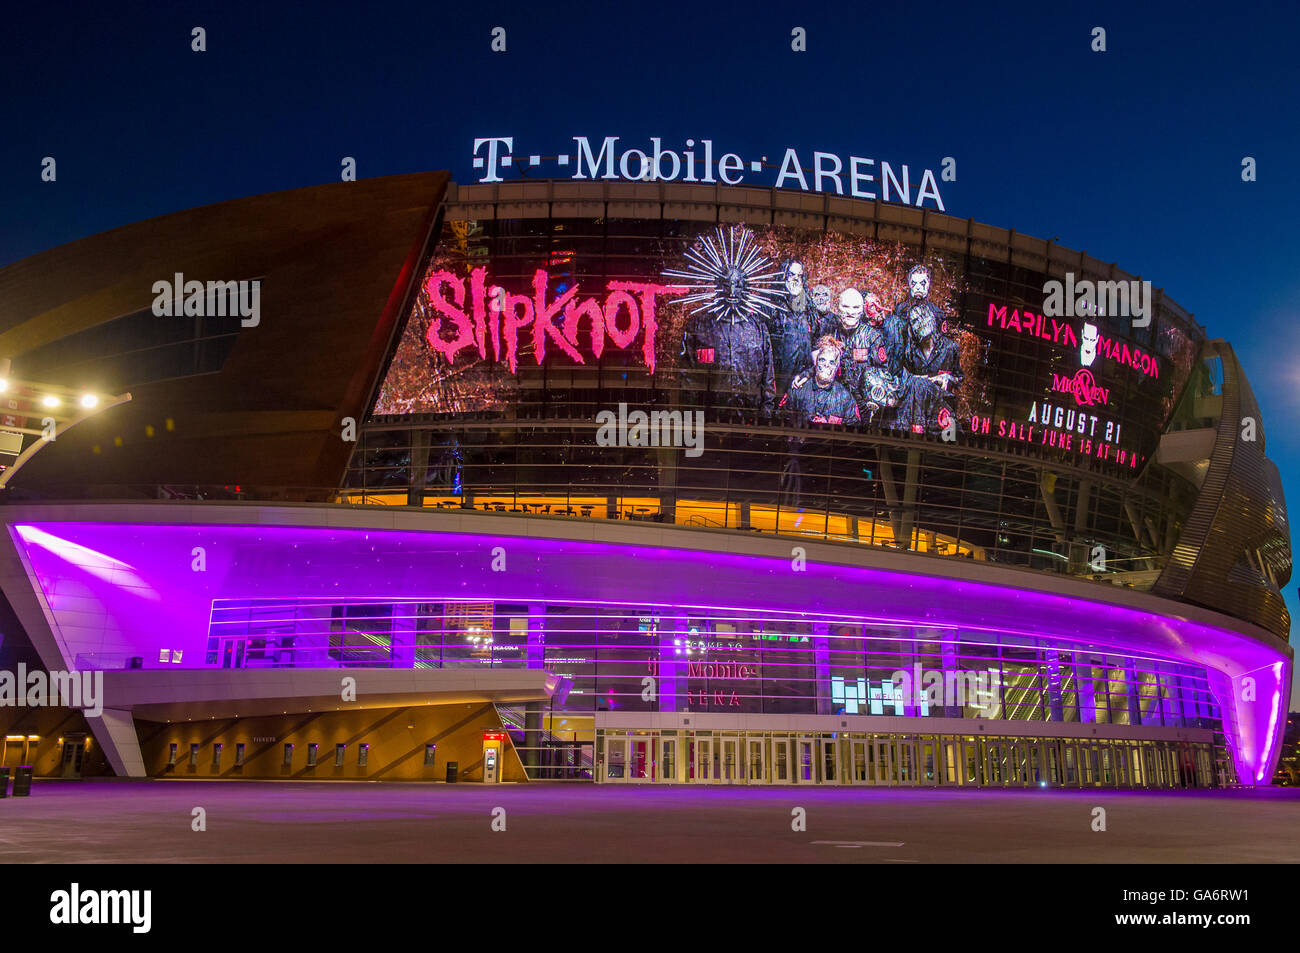 El T-Mobile arena de Las Vegas Foto de stock